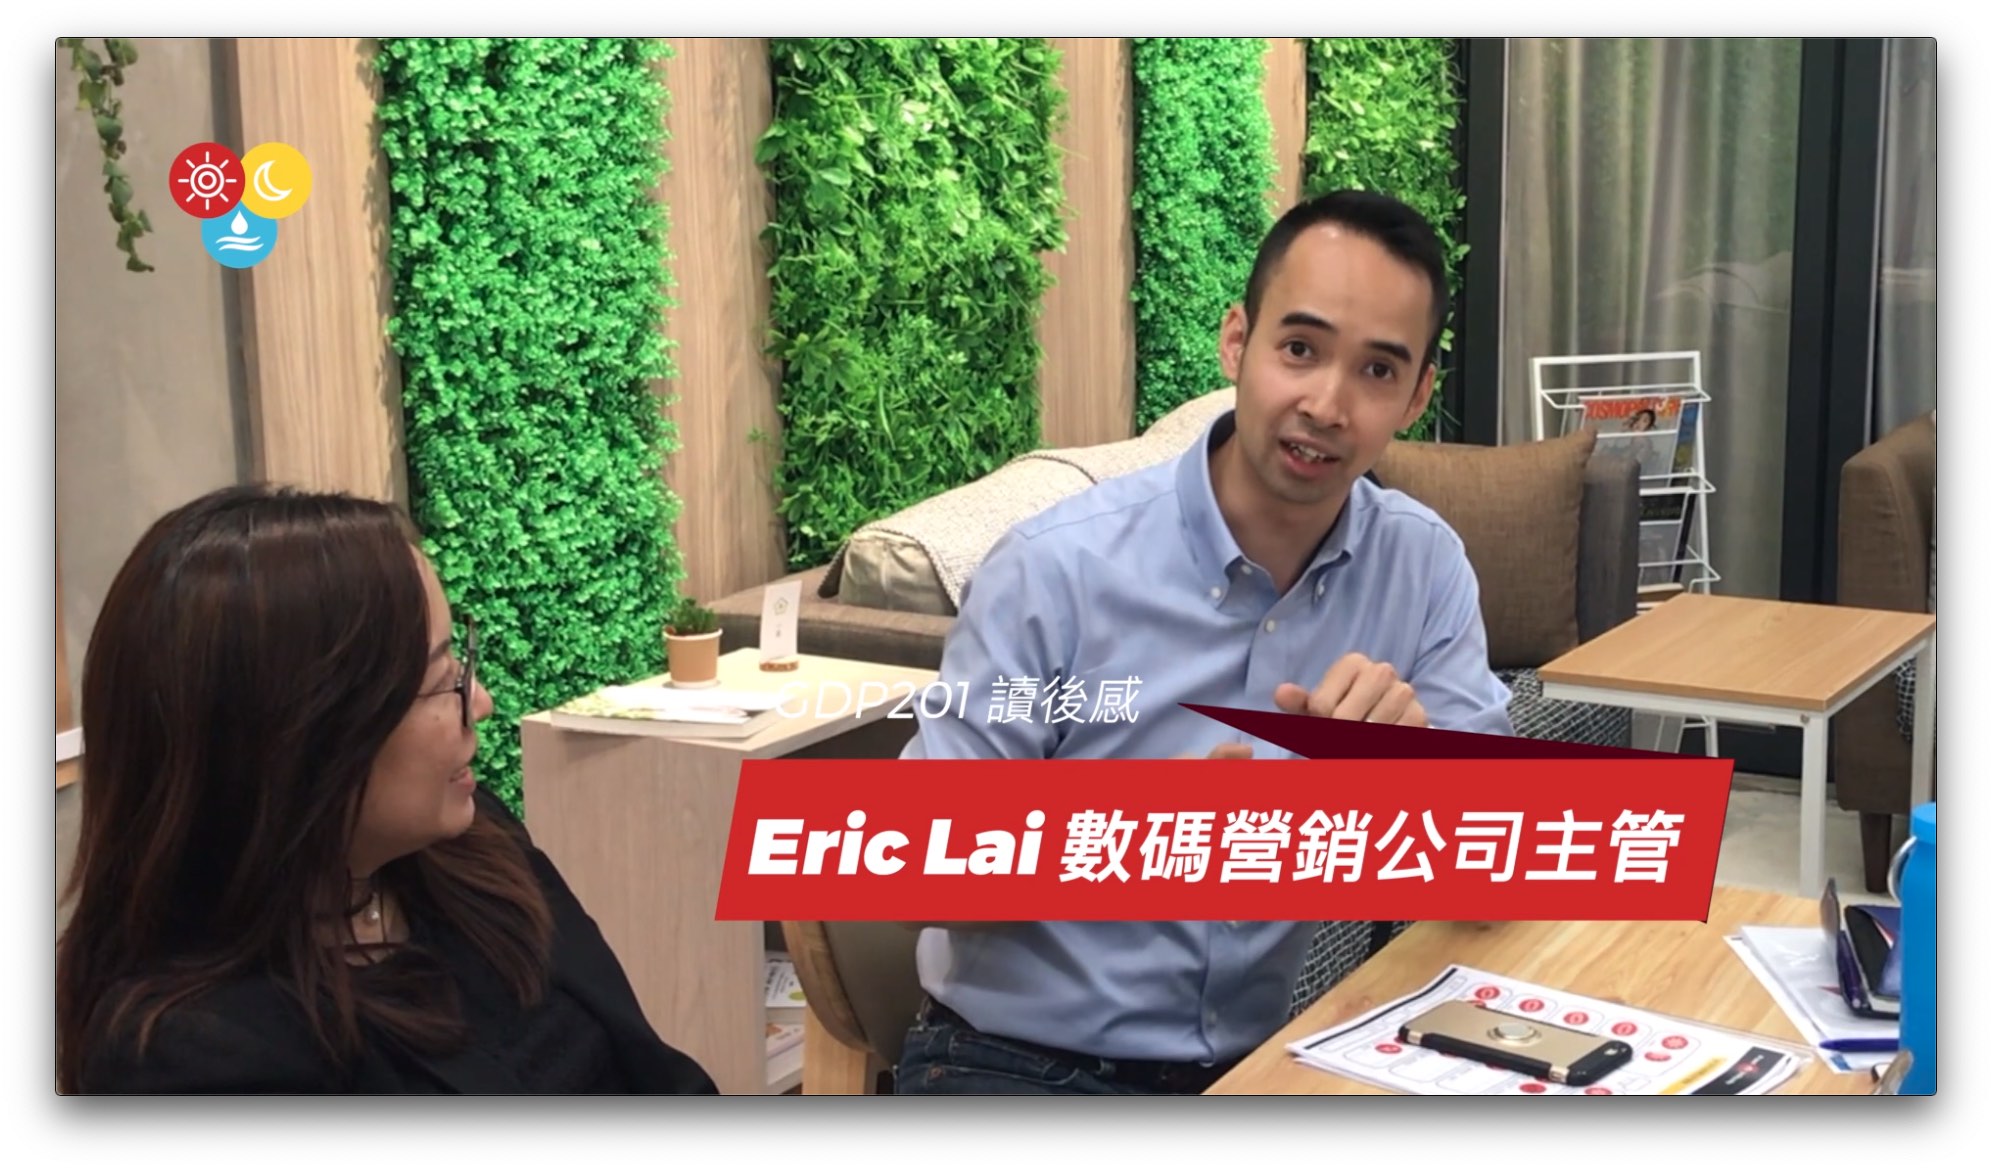 Eric Lai 數碼營銷公司主管